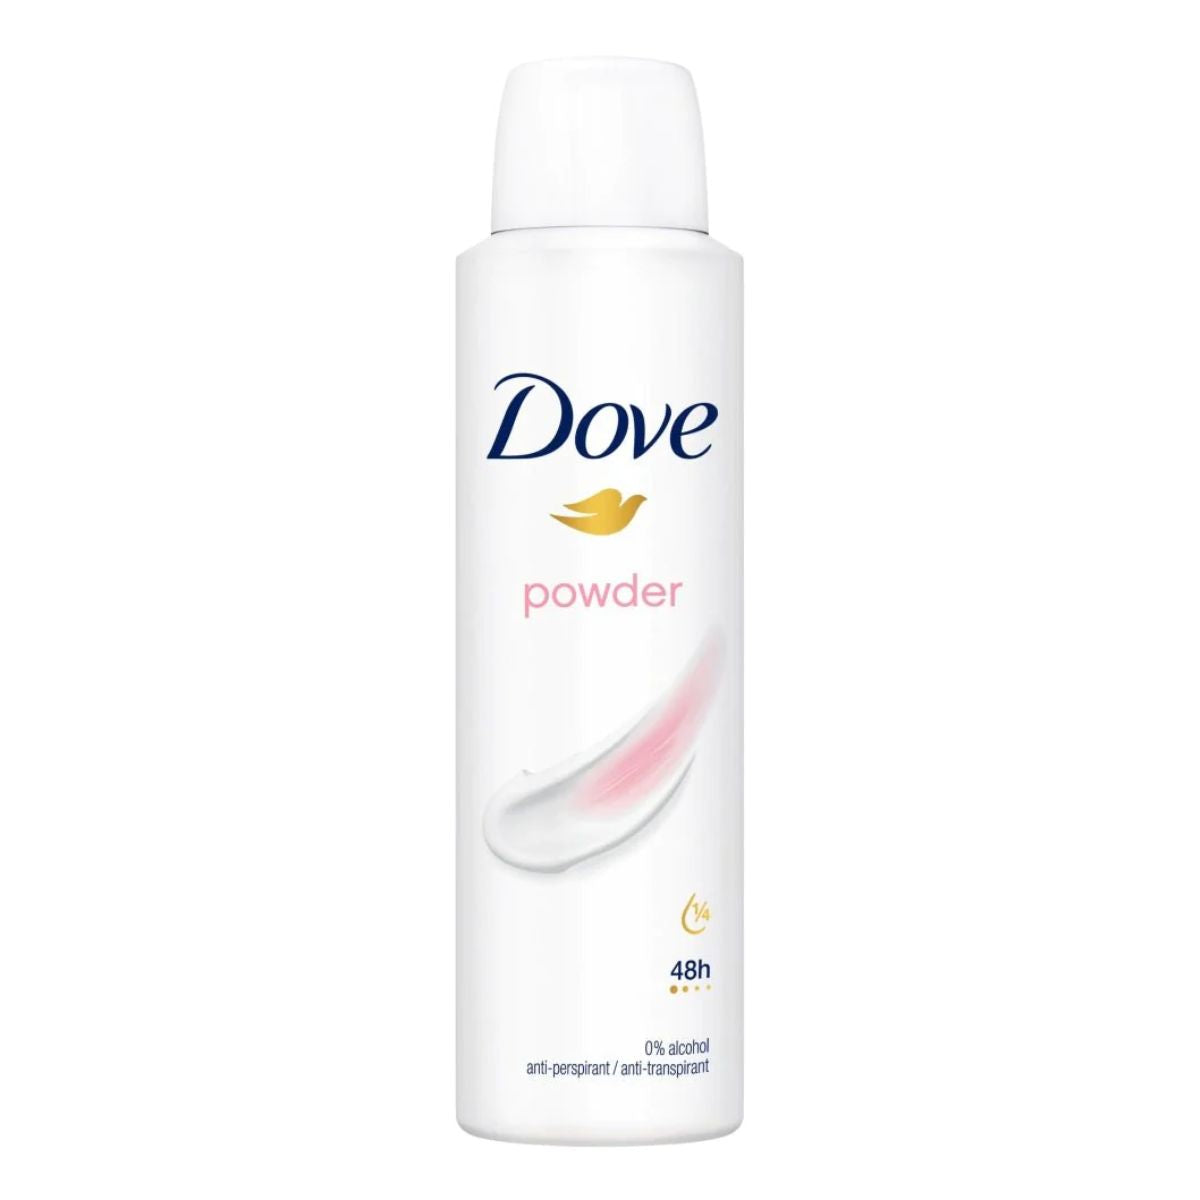 Dove - Powder 48h Anti-Perspirant Deodorant - 150ml for women.